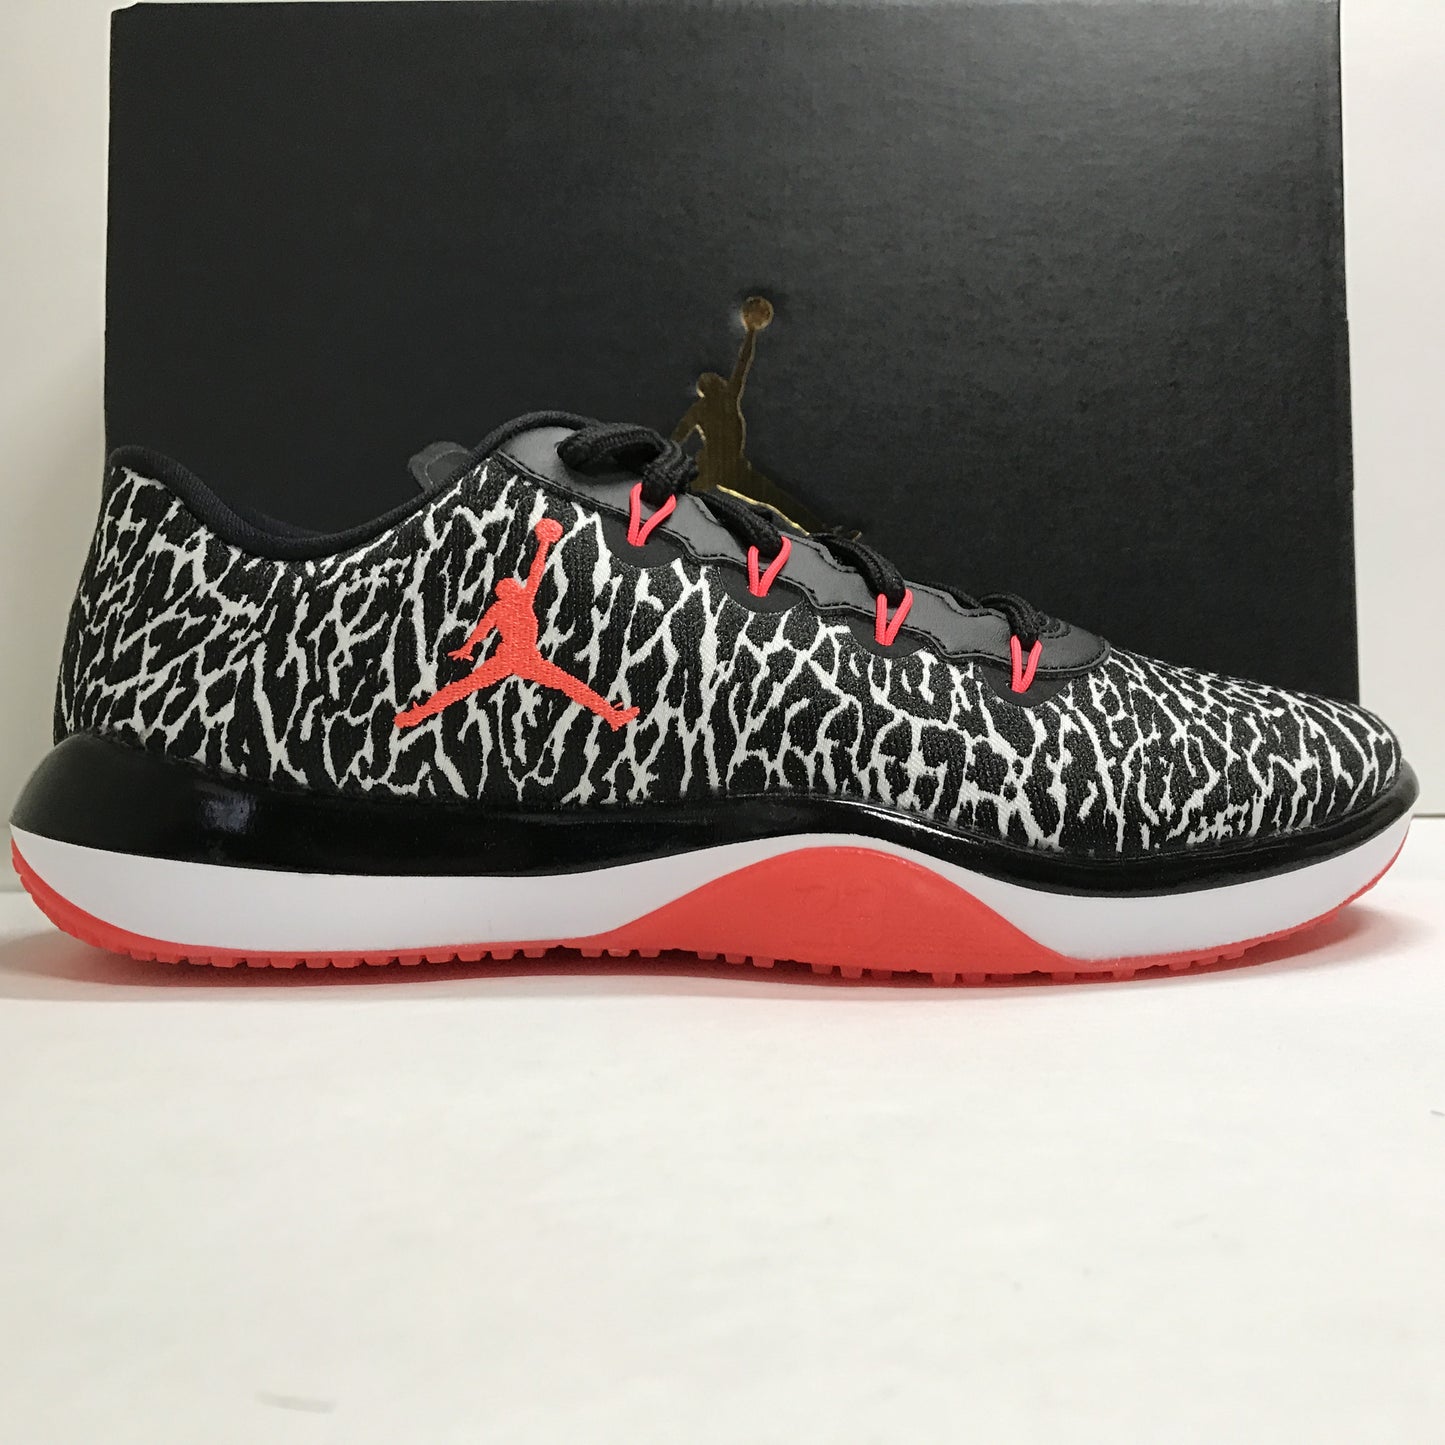 DS Nike Air Jordan Trainer 1 Black Elephant Print/Infrared  Low BG Size 7Y - DOPEFOOT
 - 1